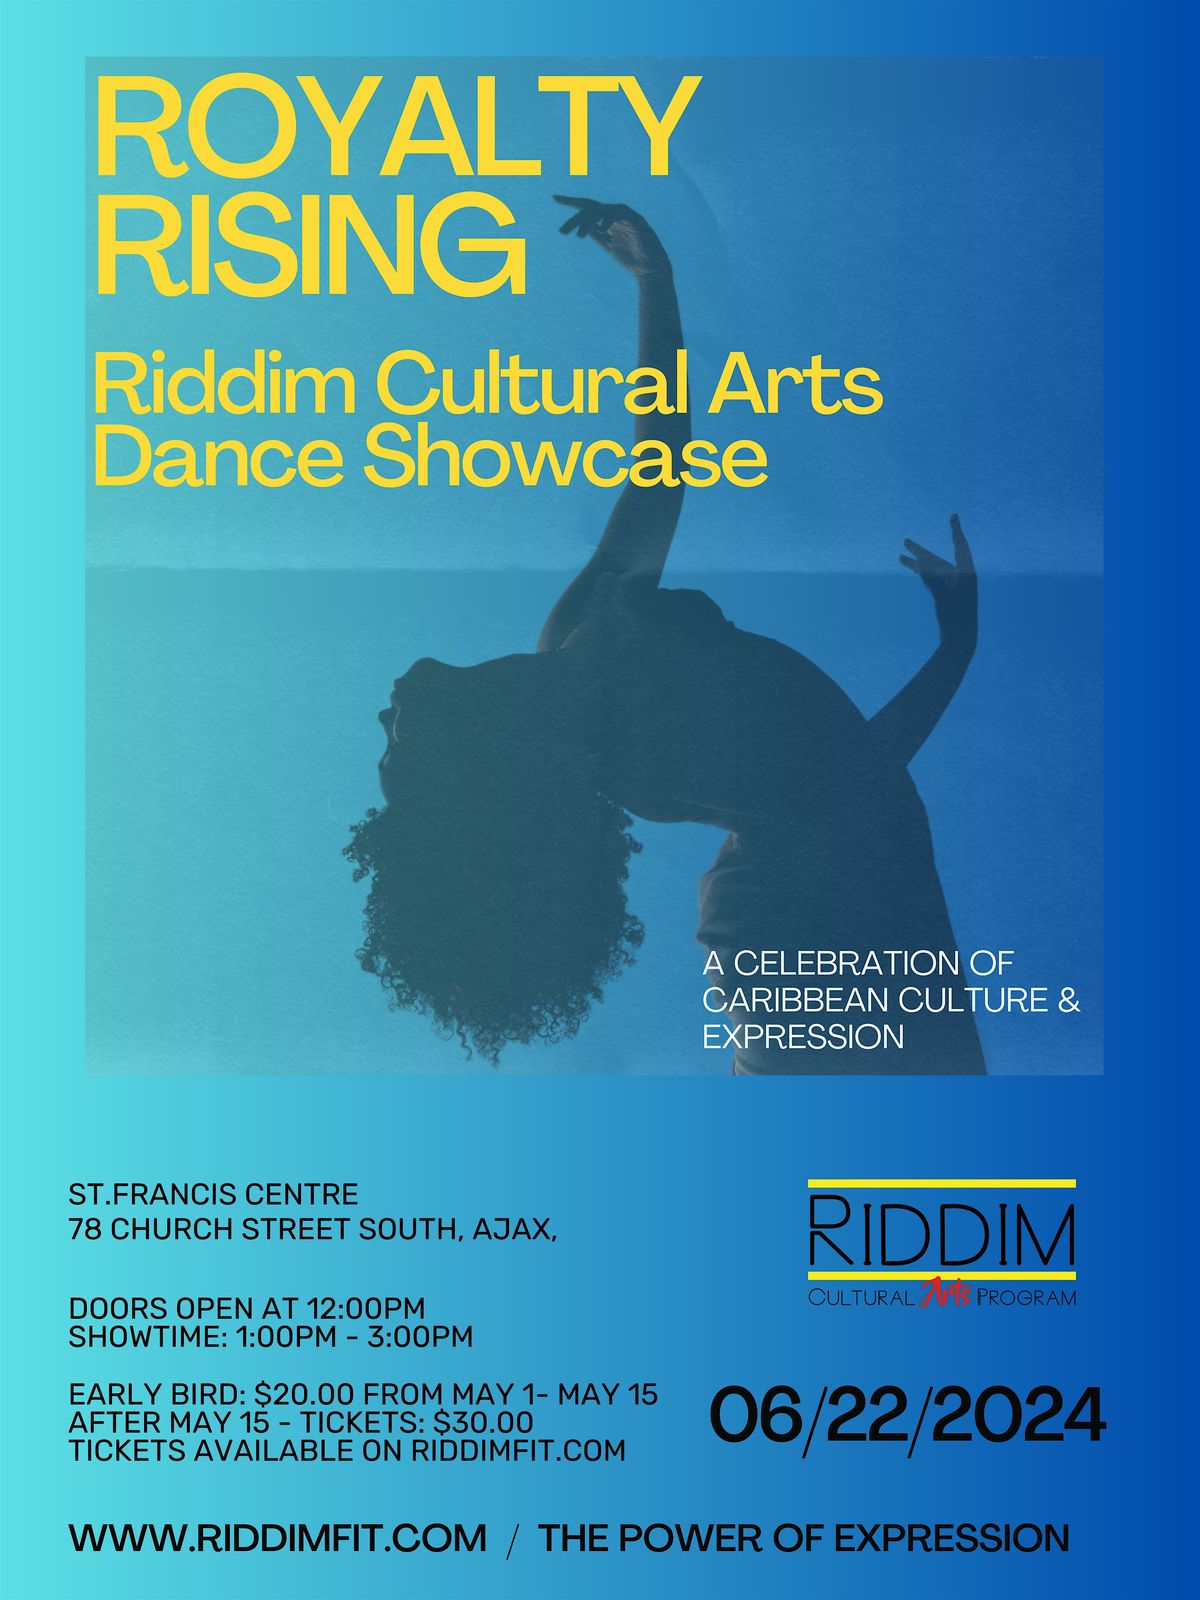 Riddim Cultural Arts Annual Showcase: Royalty Rising 24